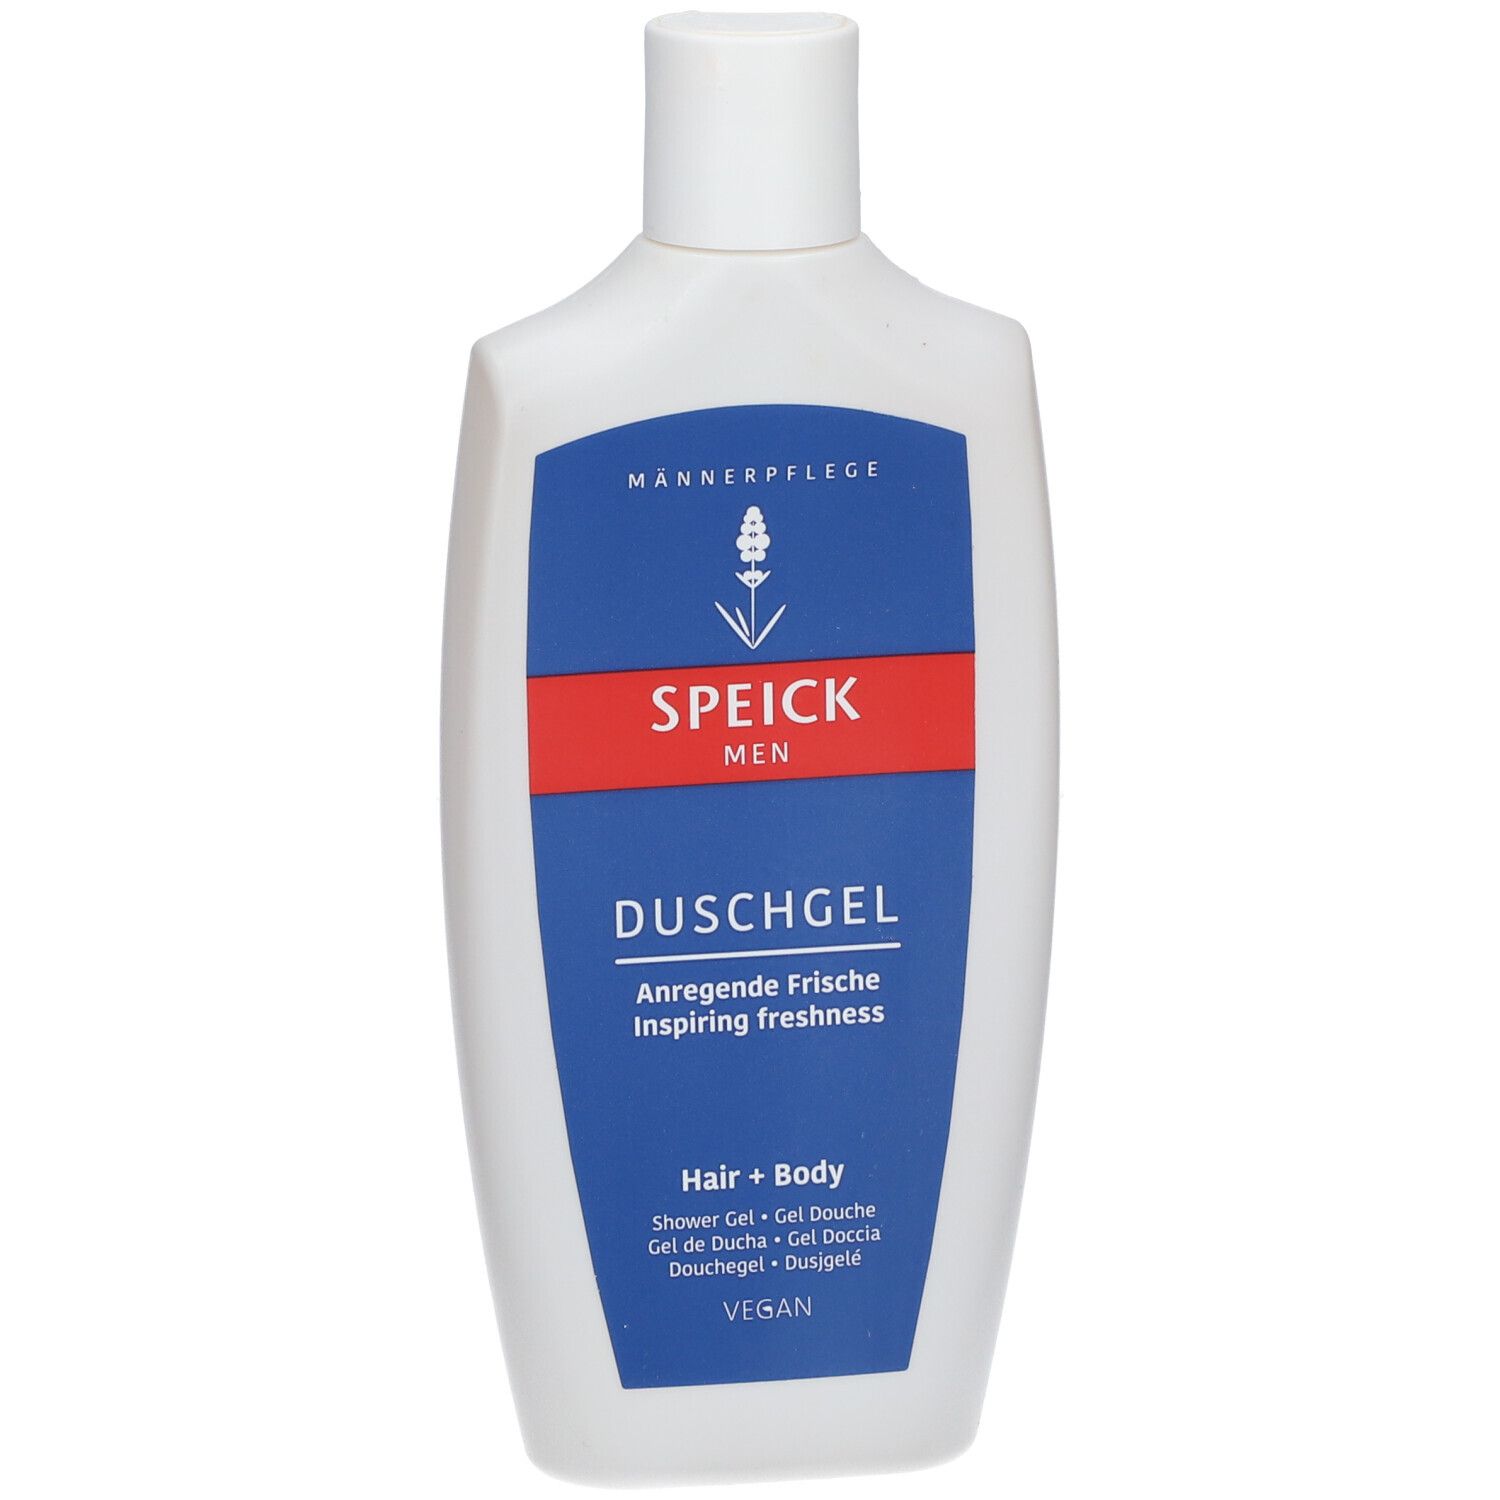 SPEICK Men Duschgel Hair + Body